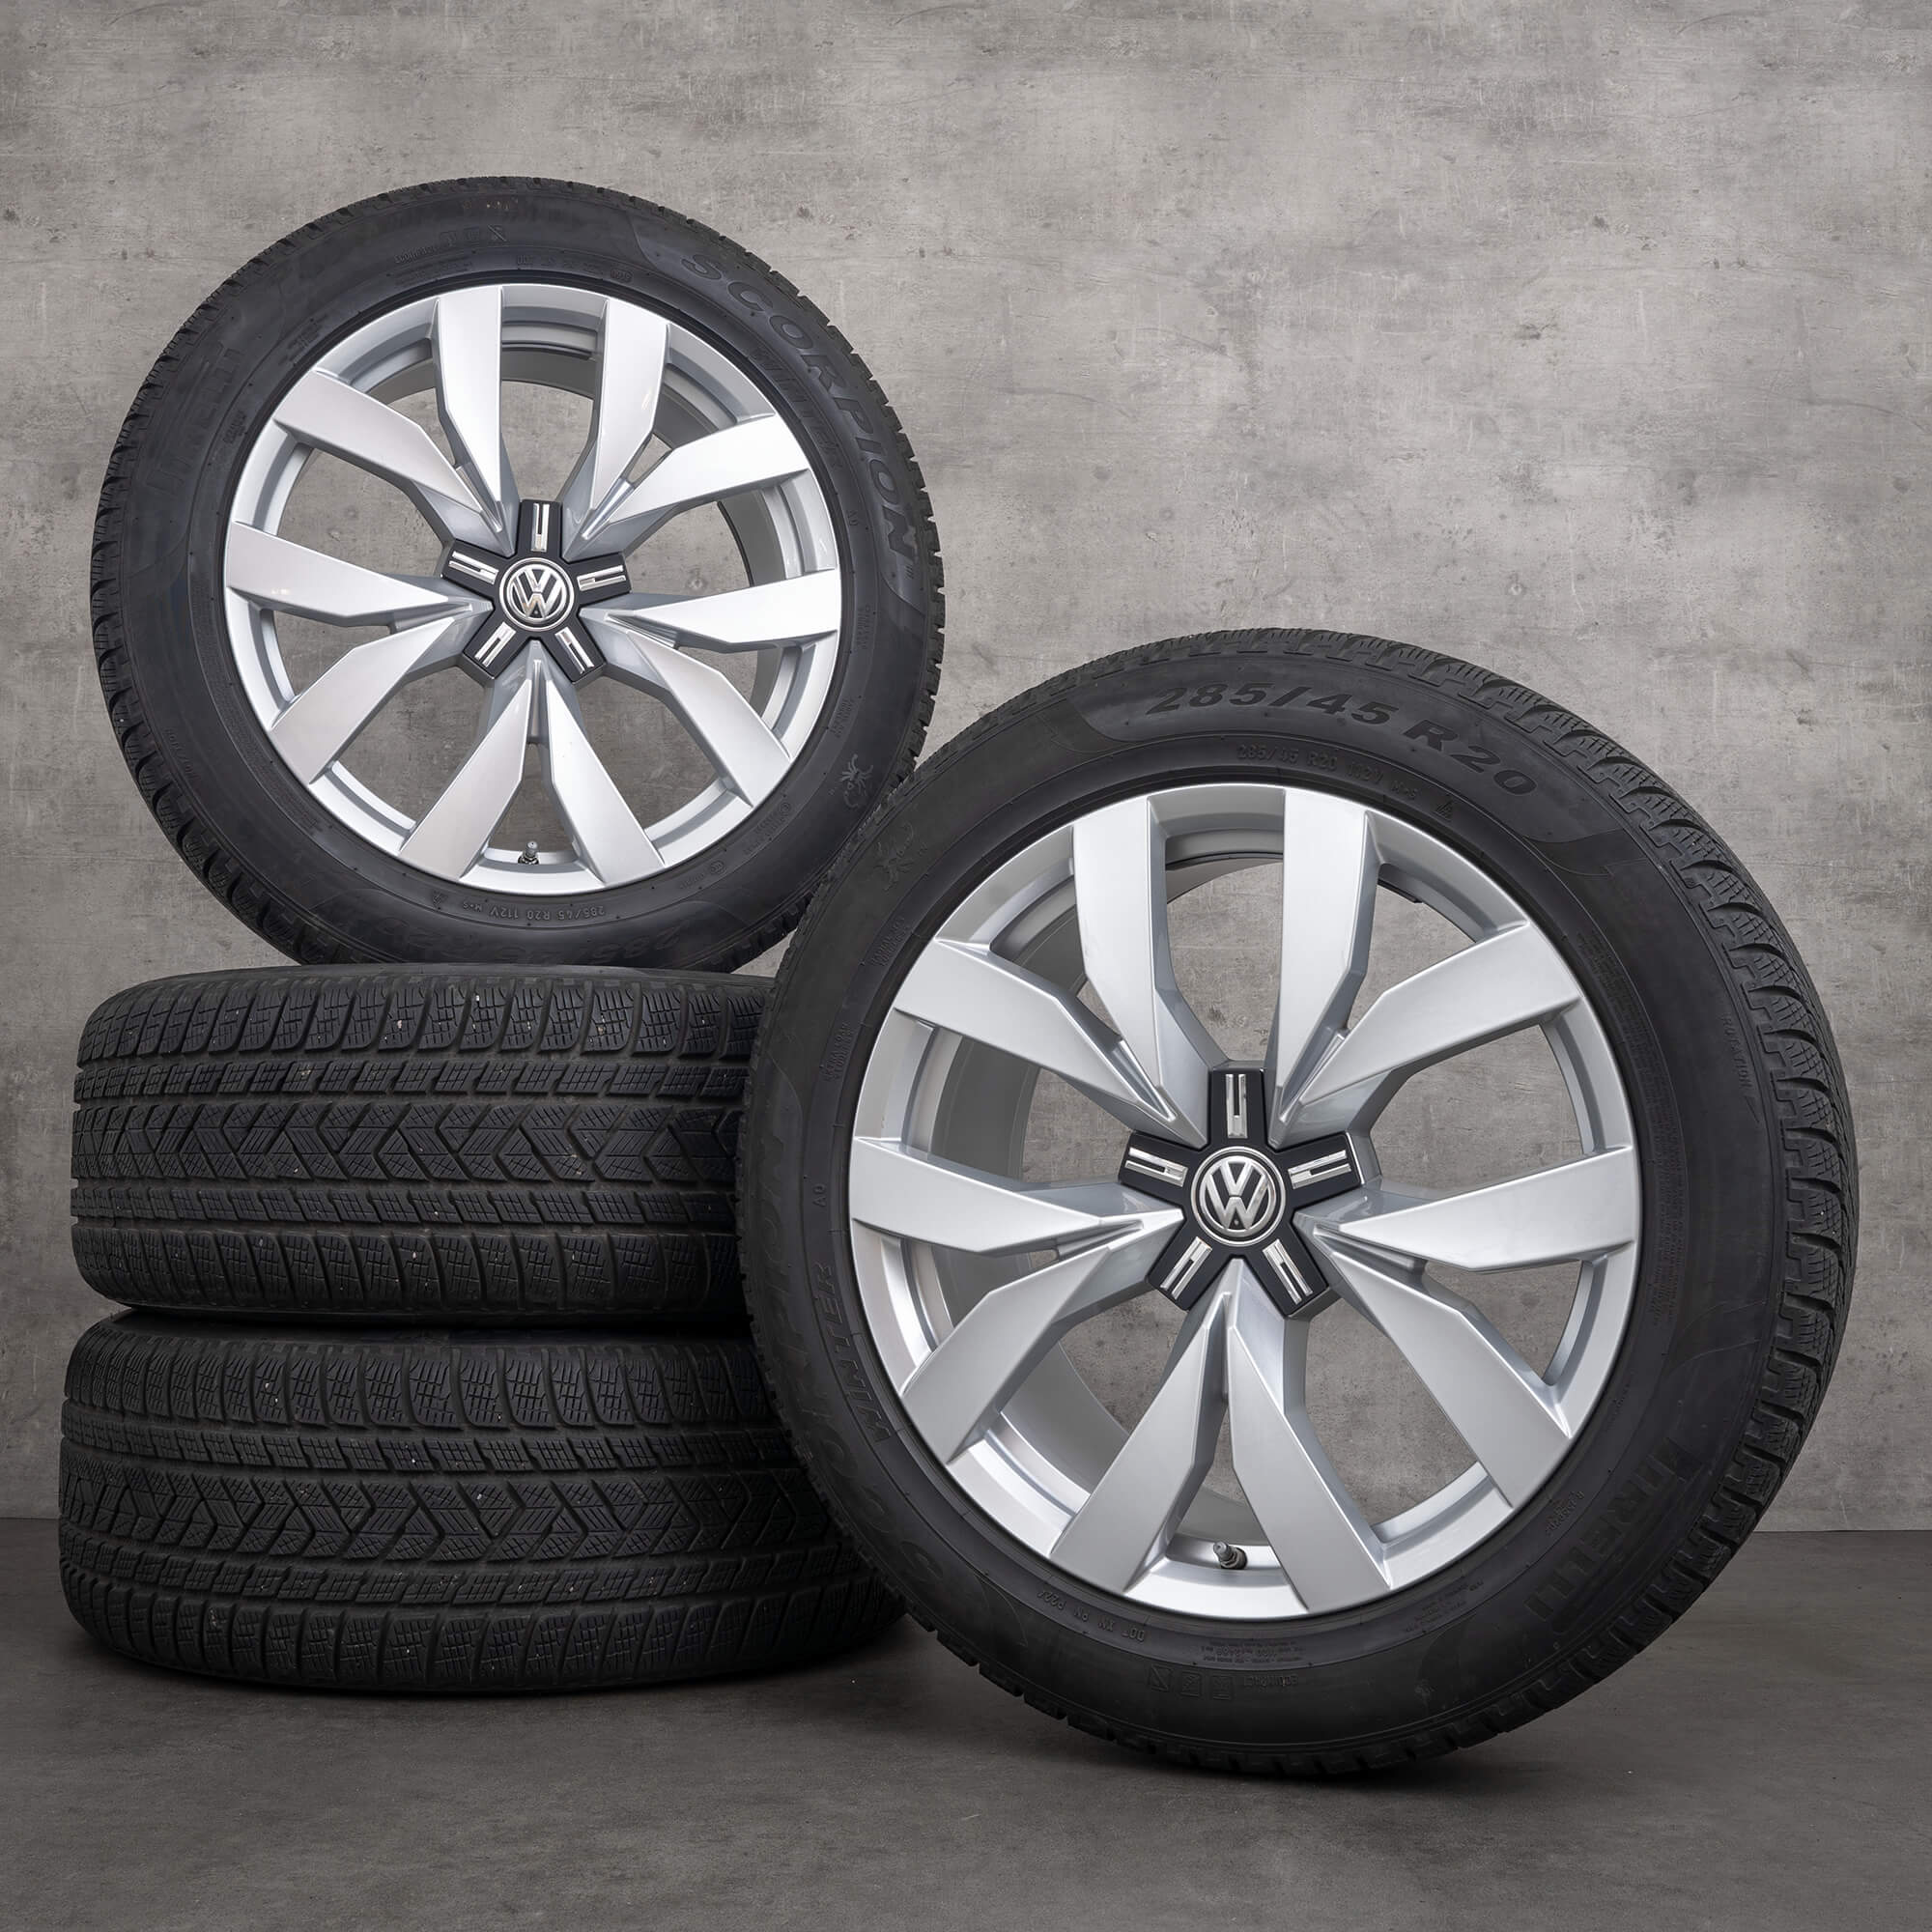 Rodas de inverno VW Touareg III CR, pneus Montero, jantes 20 polegadas